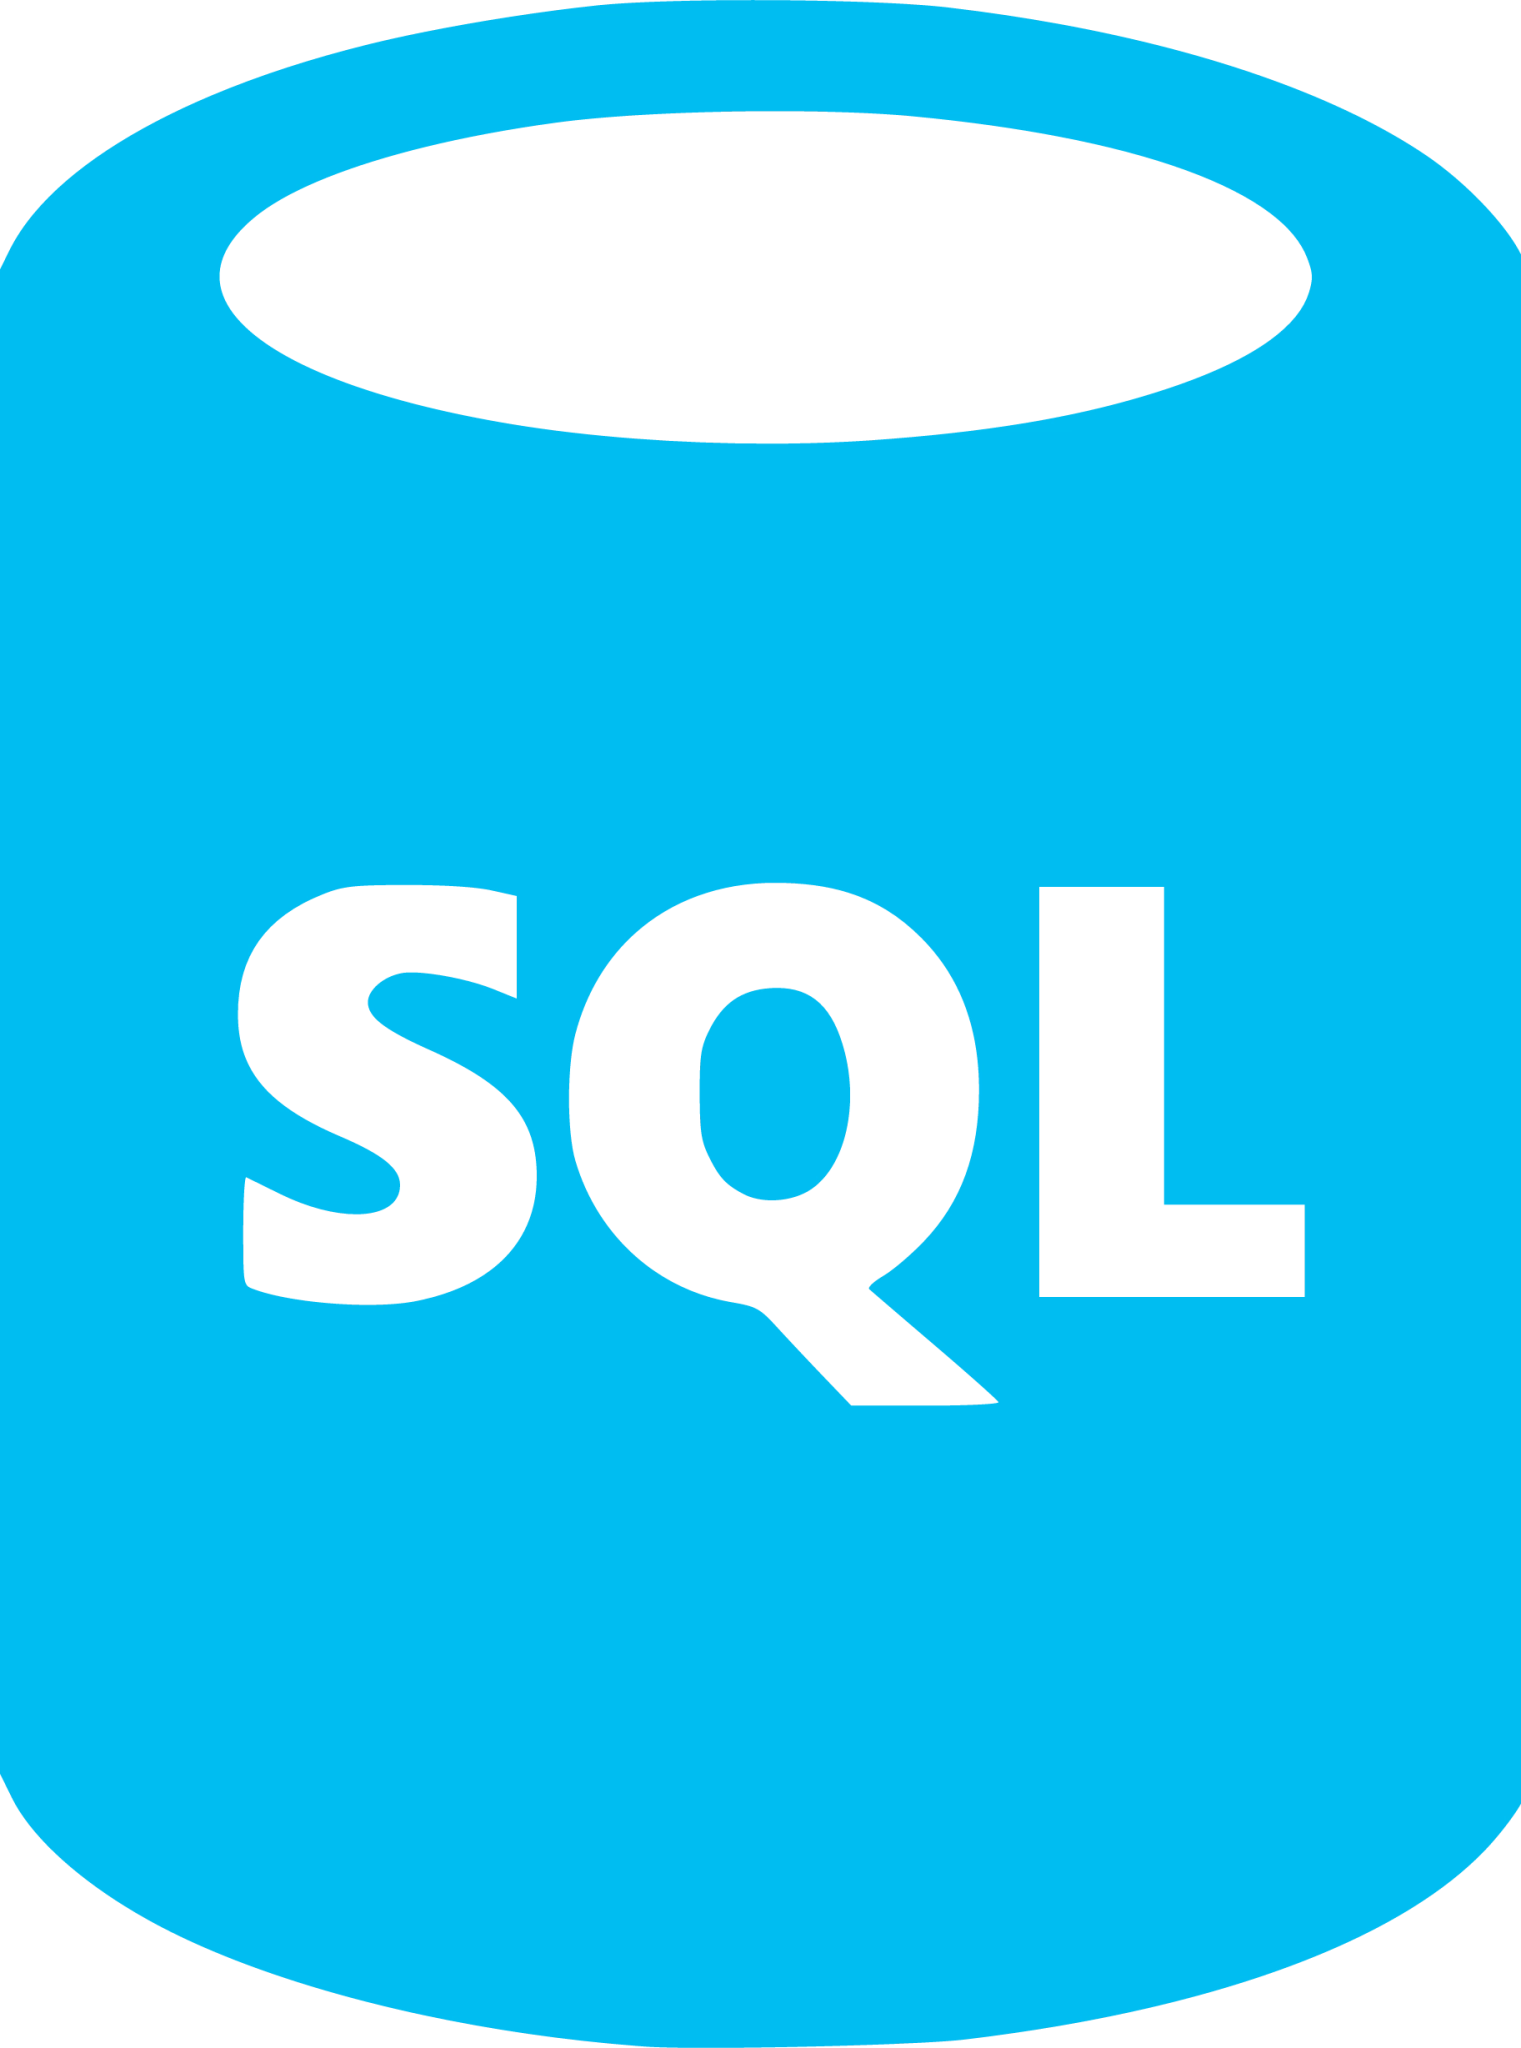 Herramientas para aprender SQL